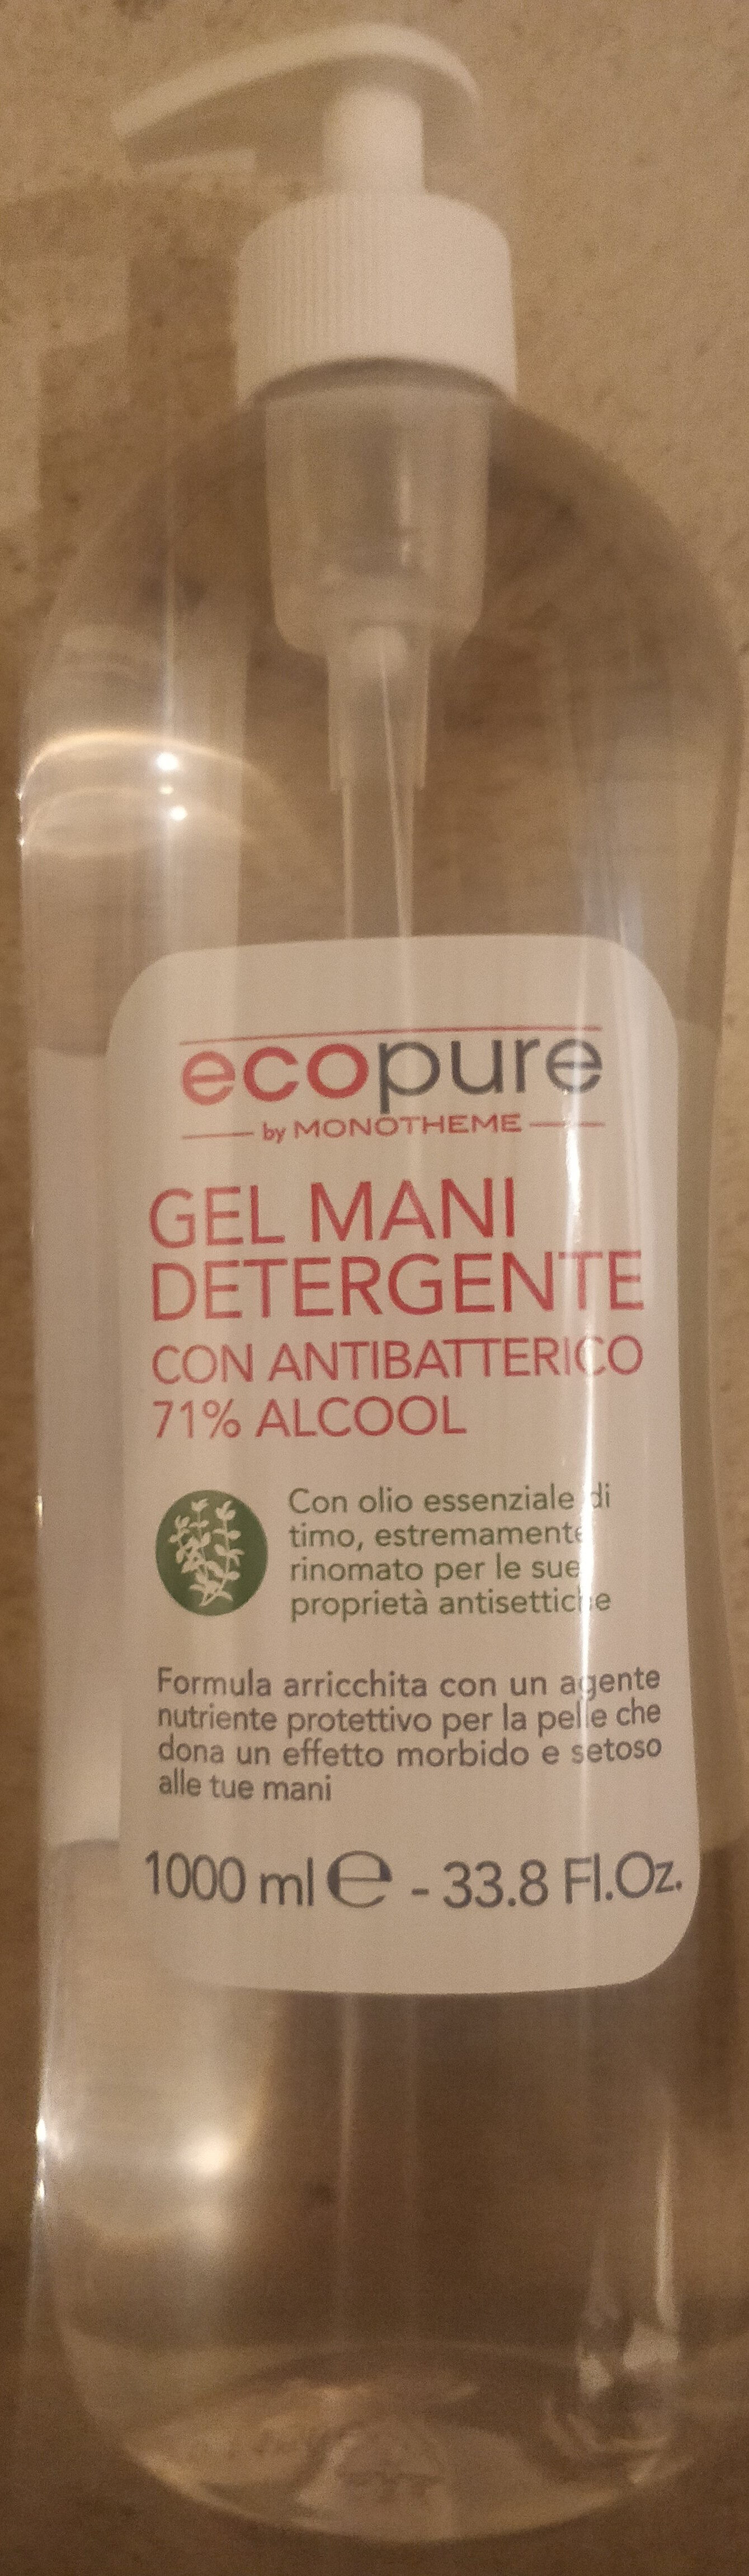 Gel mani detergente con antibatterico 71% alcool - Produto - it